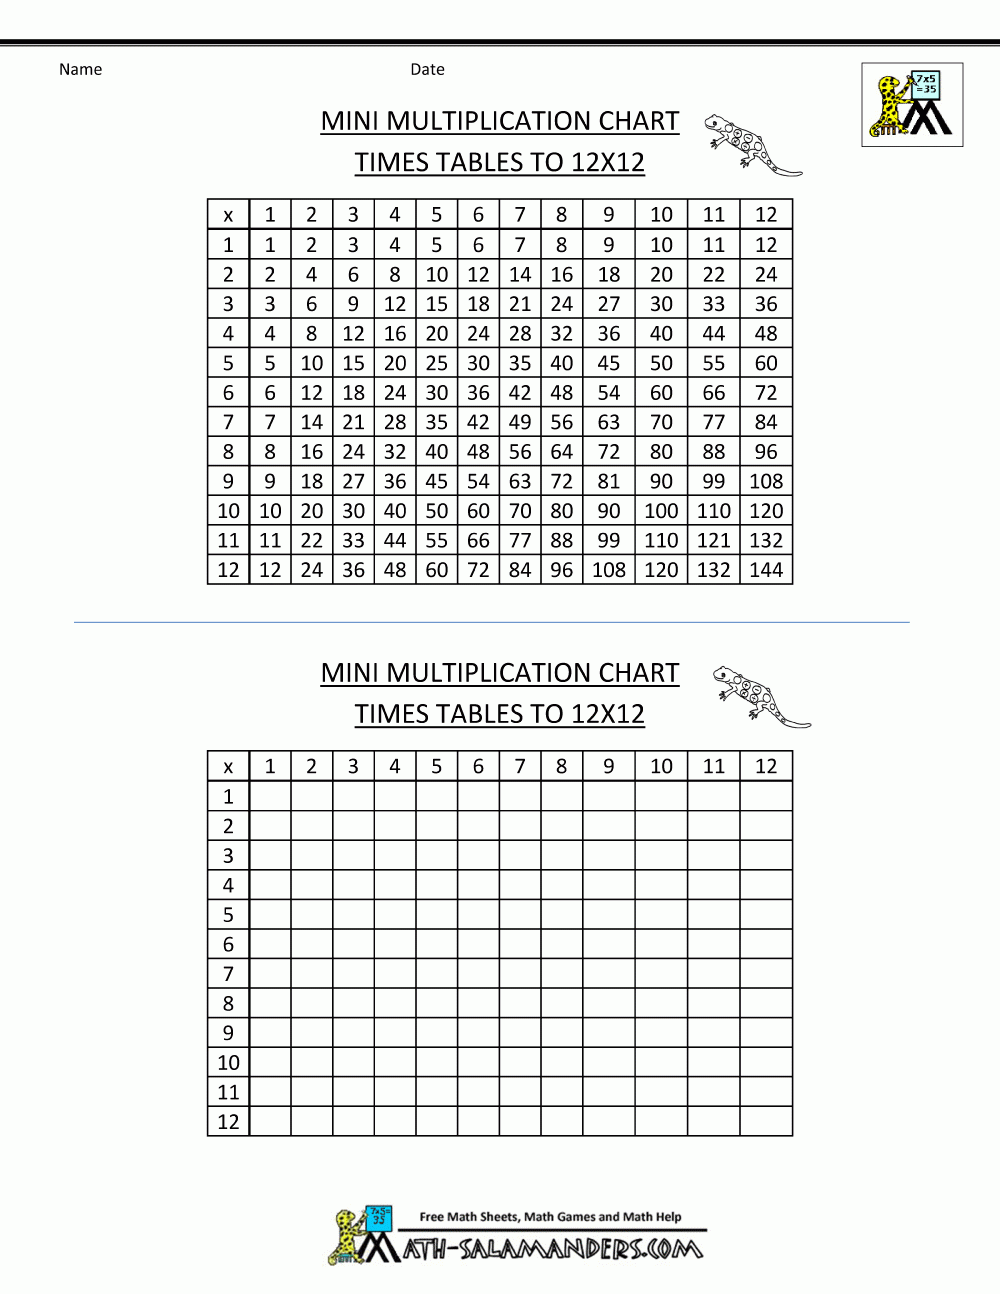 Multiplication-Times-Table-Chart-To-12X12-Mini-Blank-1.gif